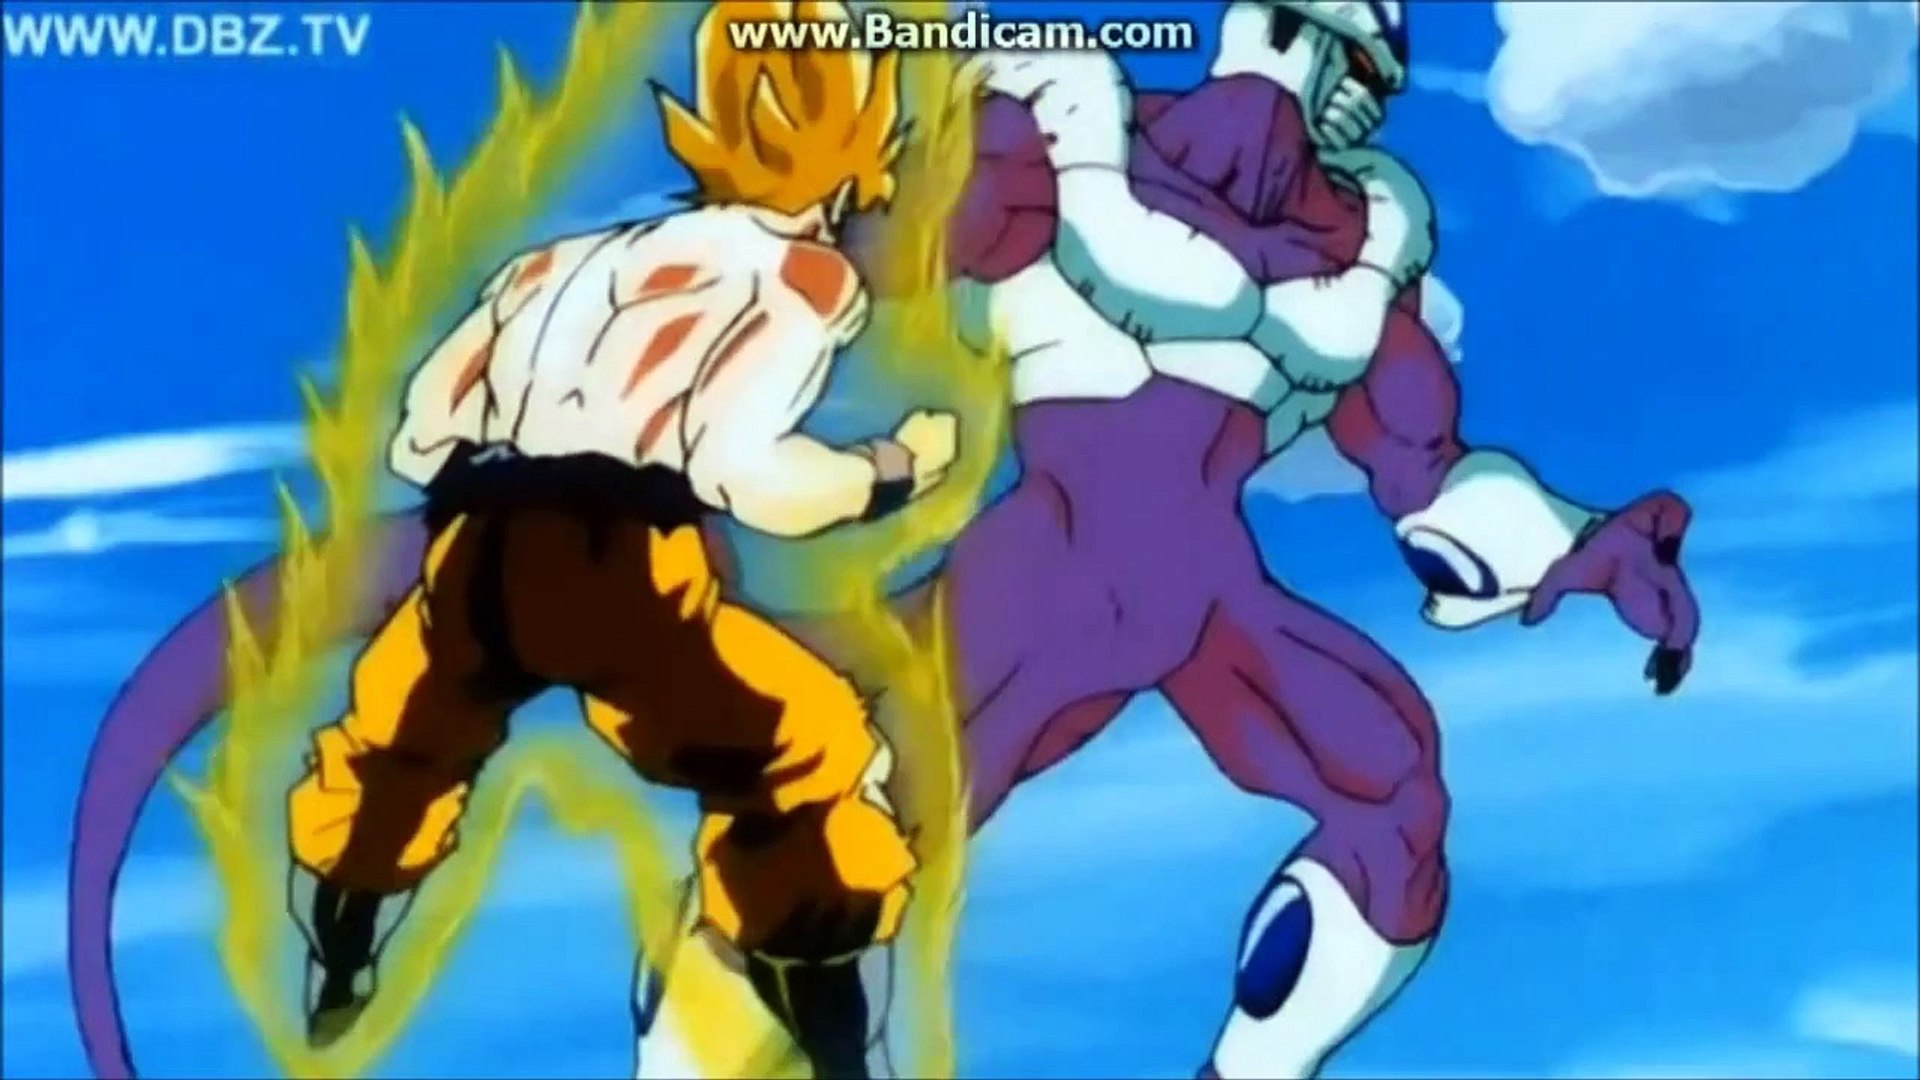 SSJ Goku vs. Cooler (Full Fight) - video Dailymotion